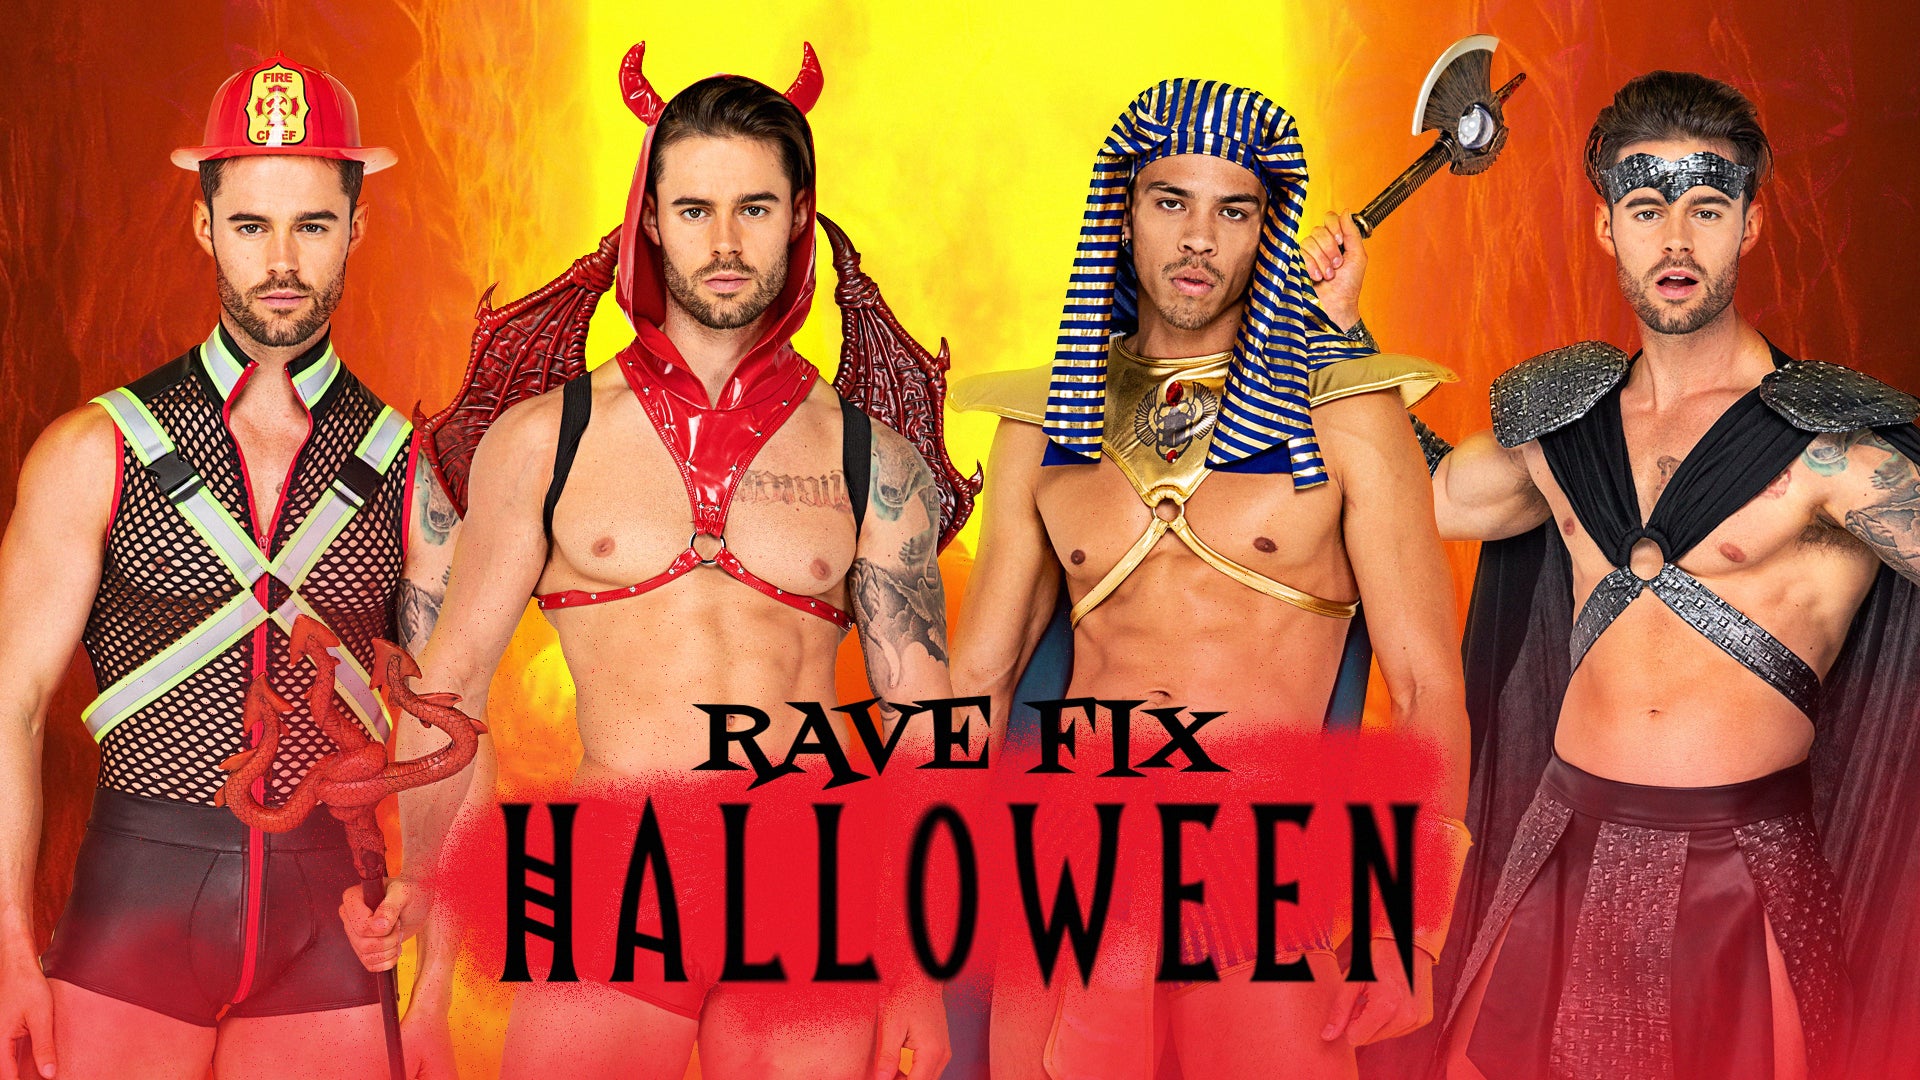 Sexy Costumes & Ravewear for Men, Halloween Costumes